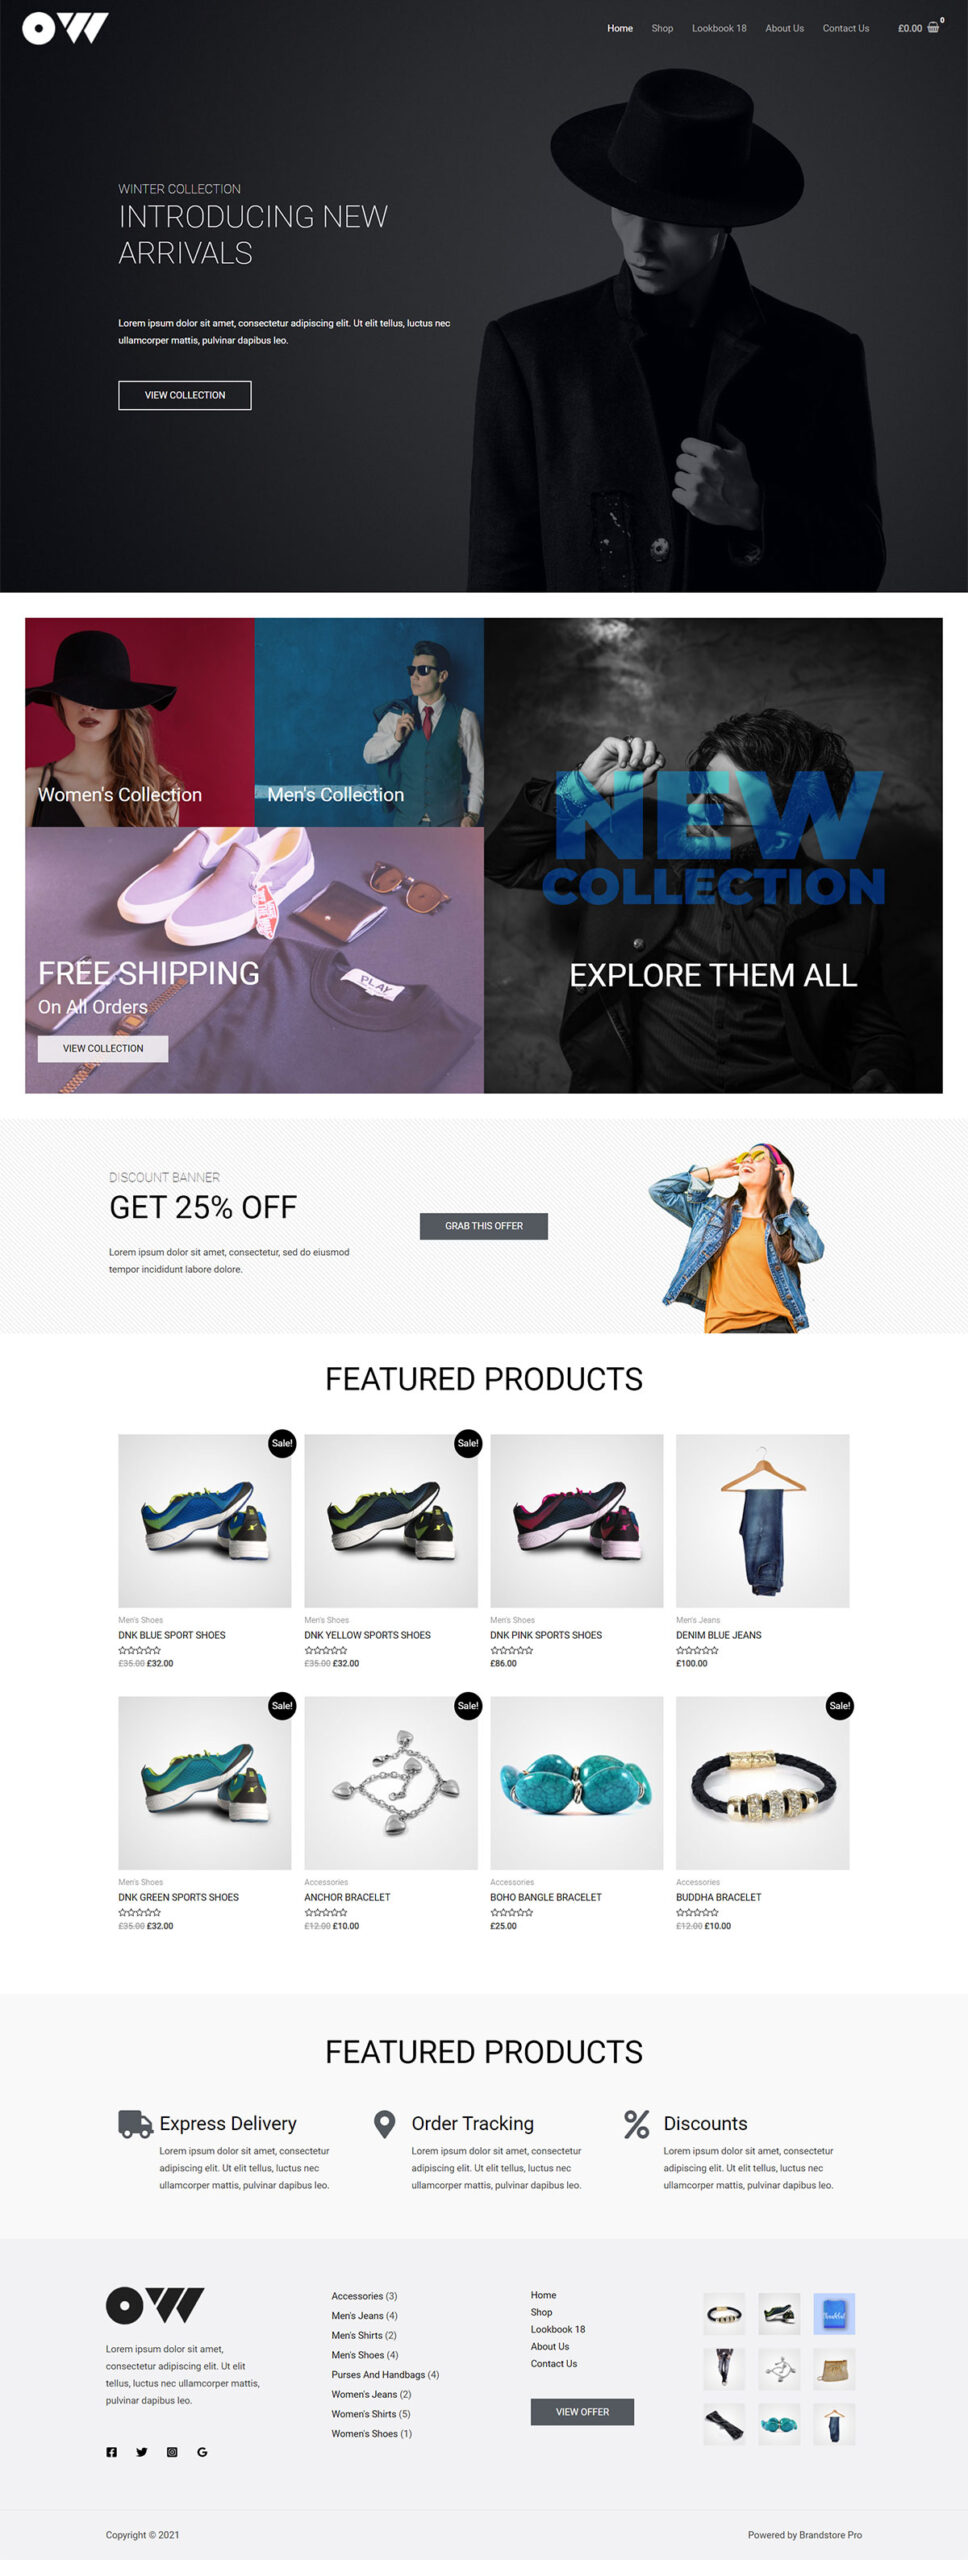 Brandstore Pro home page